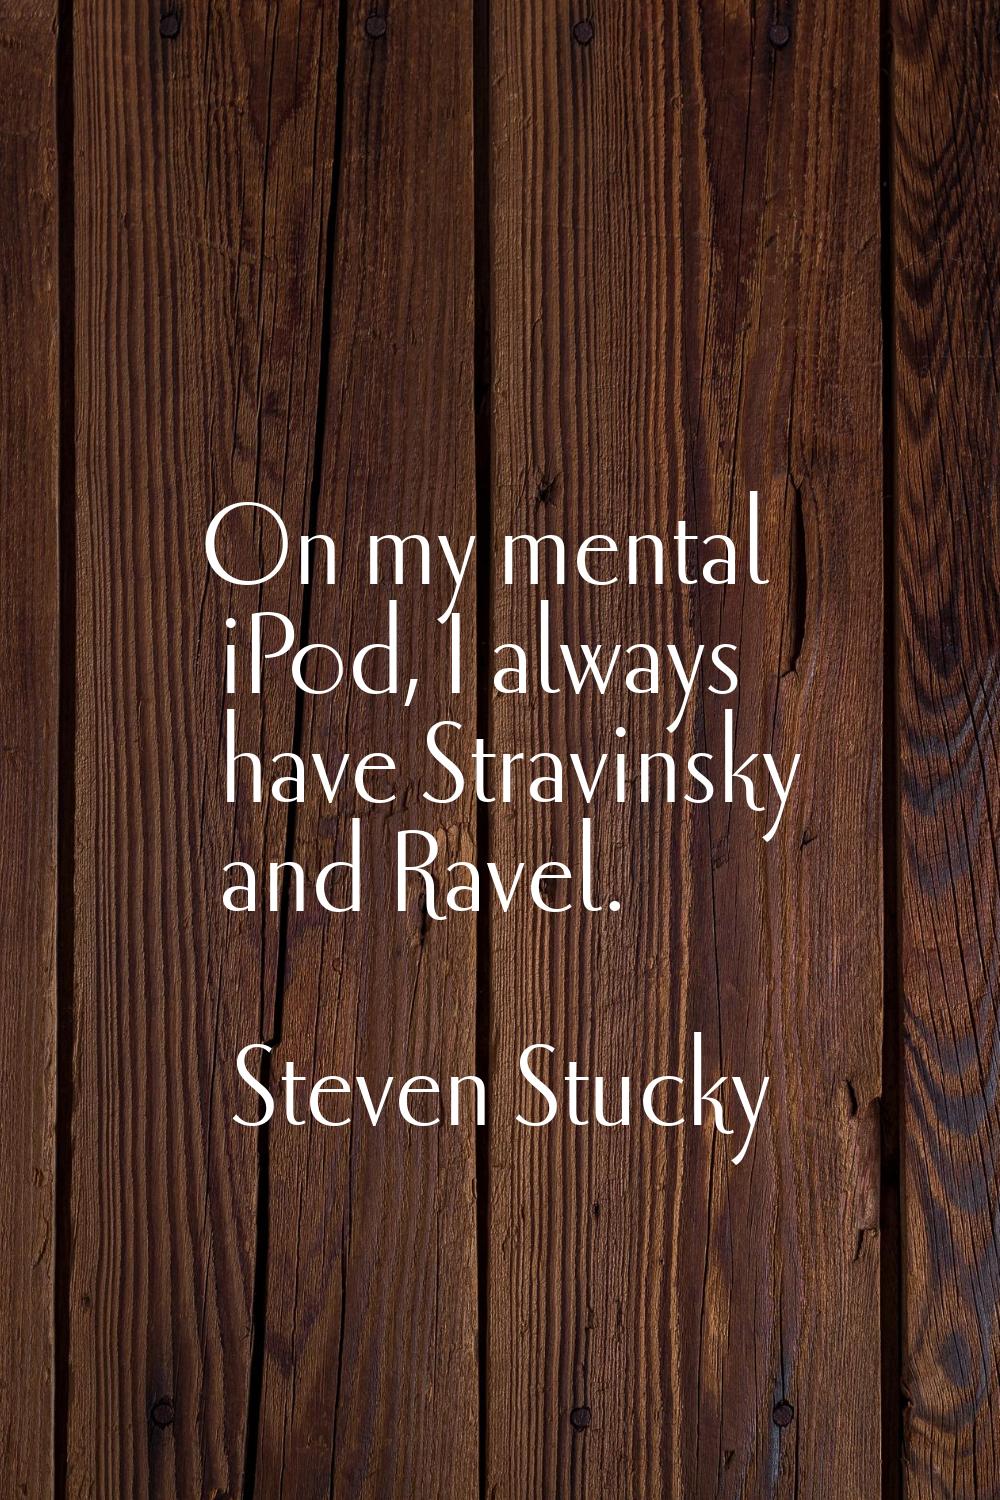 On my mental iPod, I always have Stravinsky and Ravel.